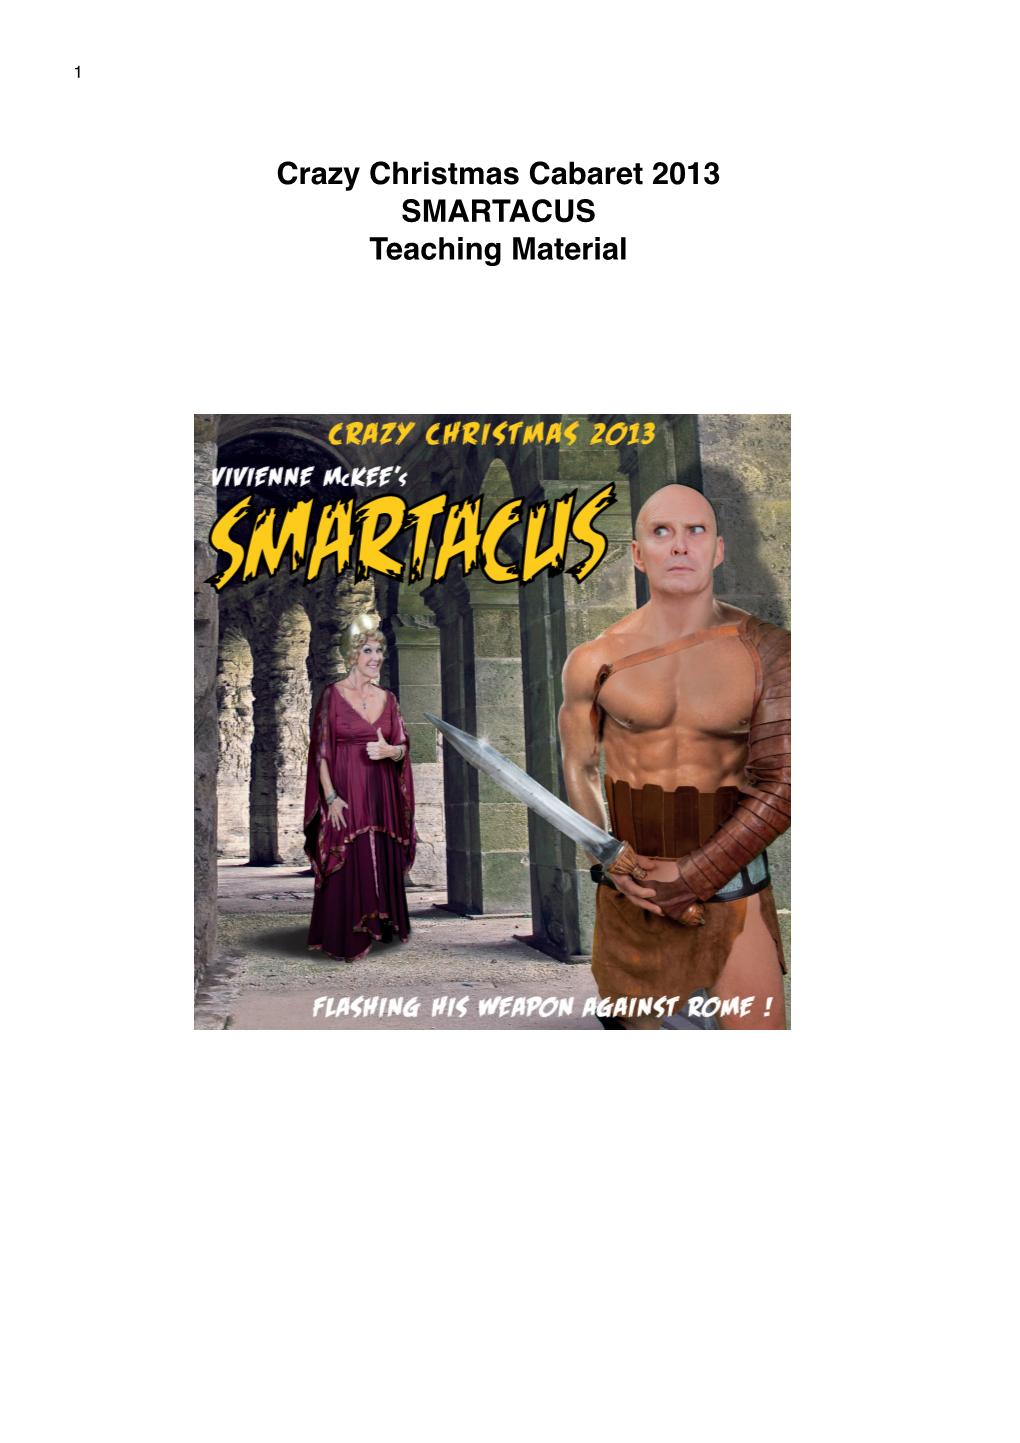 Crazy Christmas Cabaret 2013 SMARTACUS Teaching Material 2 Introduction